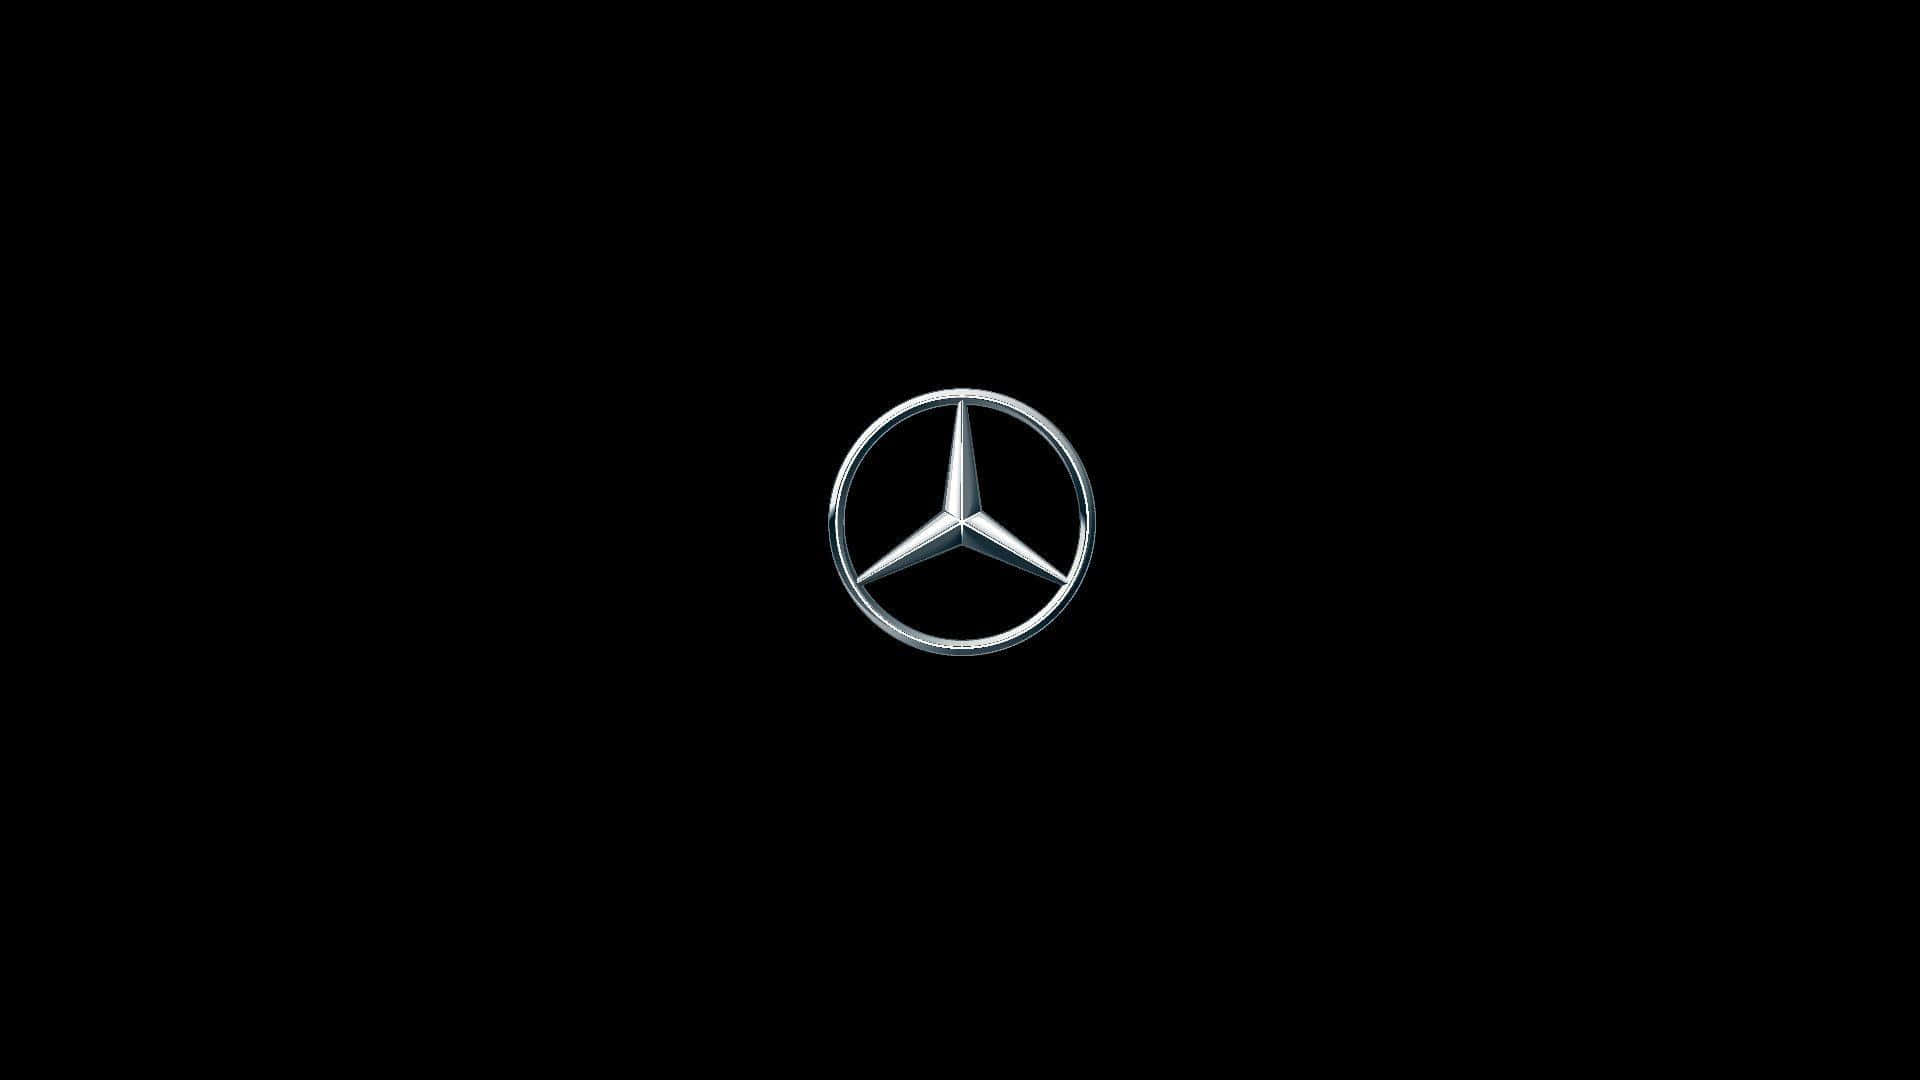 "The Iconic Mercedes Benz Logo"